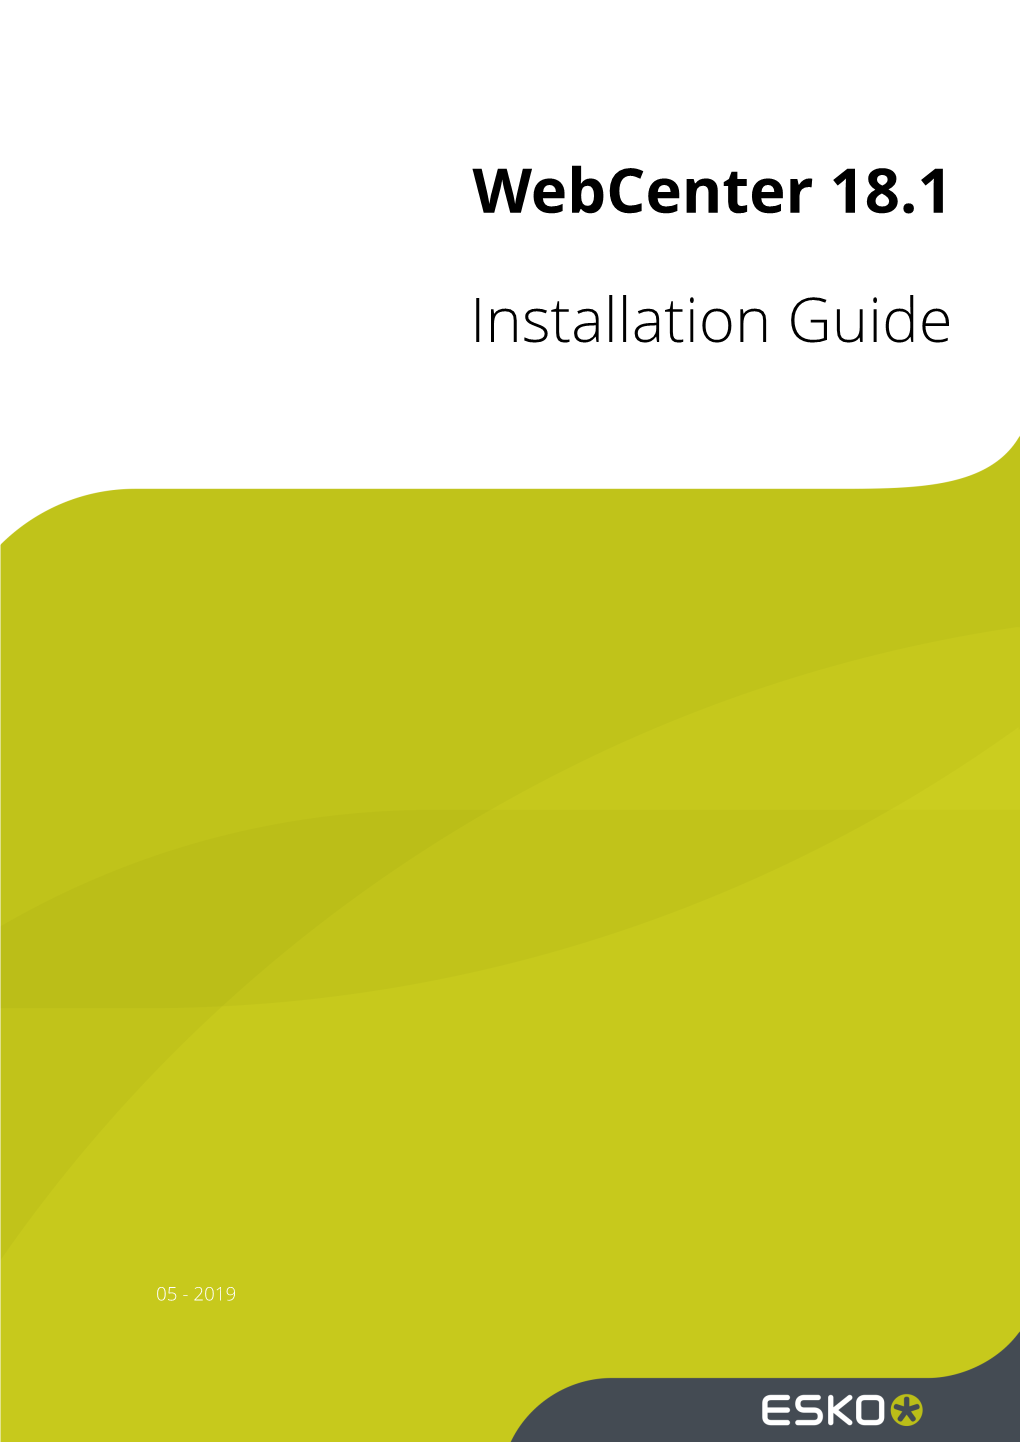 Webcenter 18.1 Installation Guide